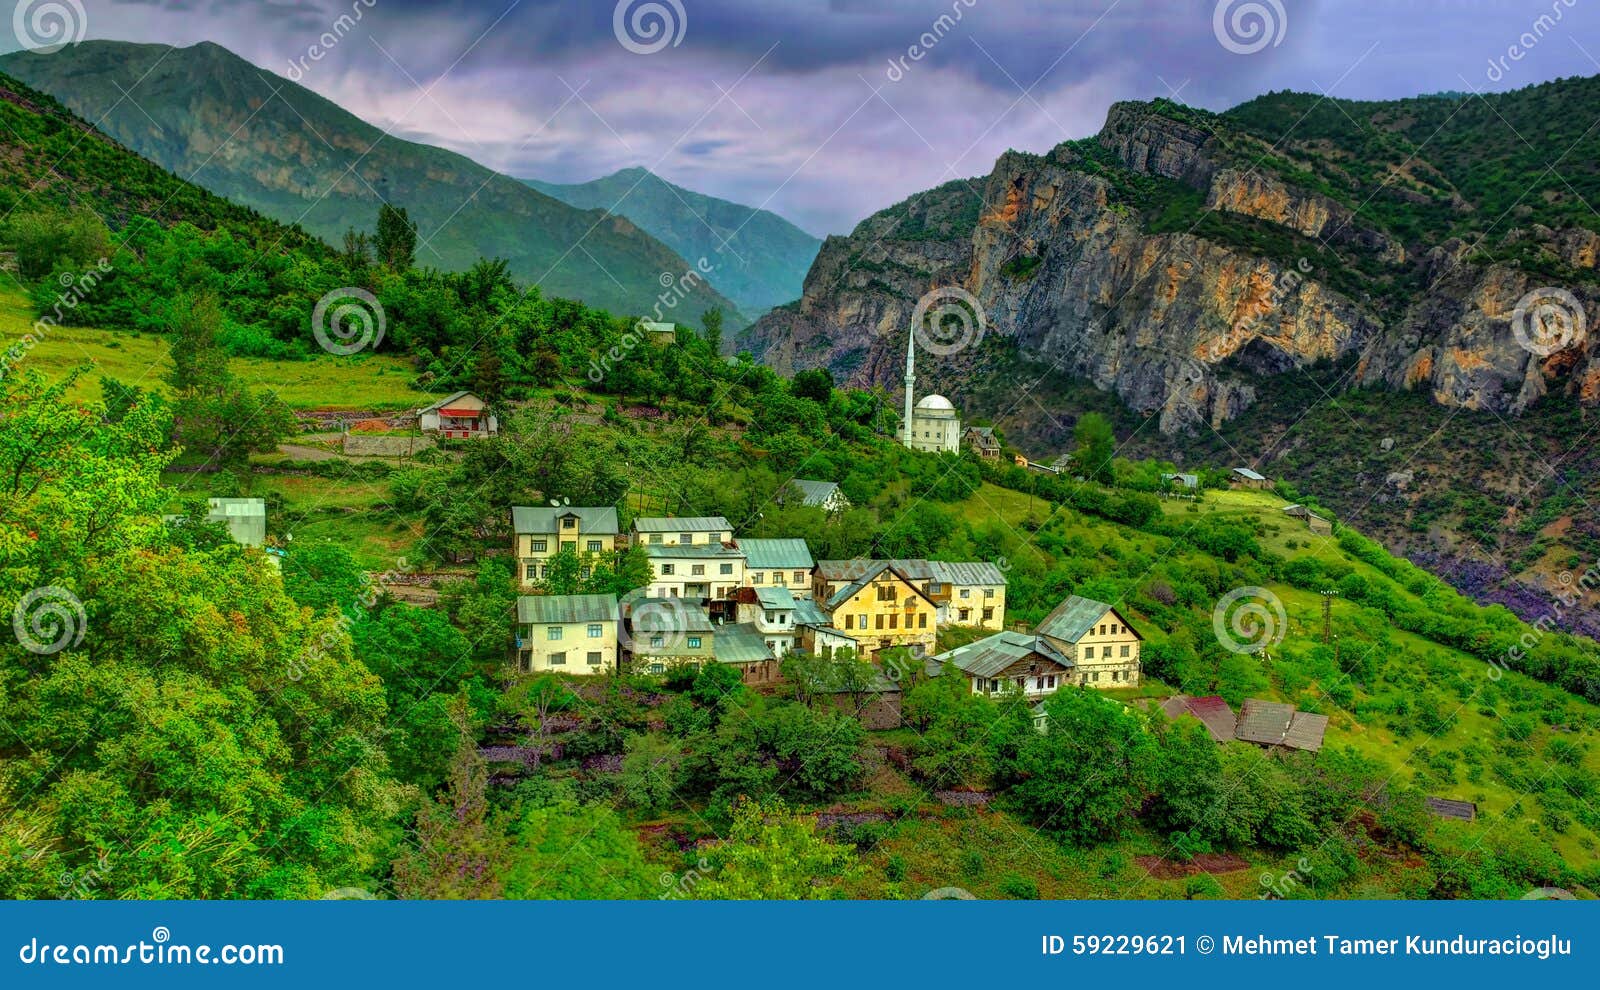 small villages of blacksea region of anatolia, turkey